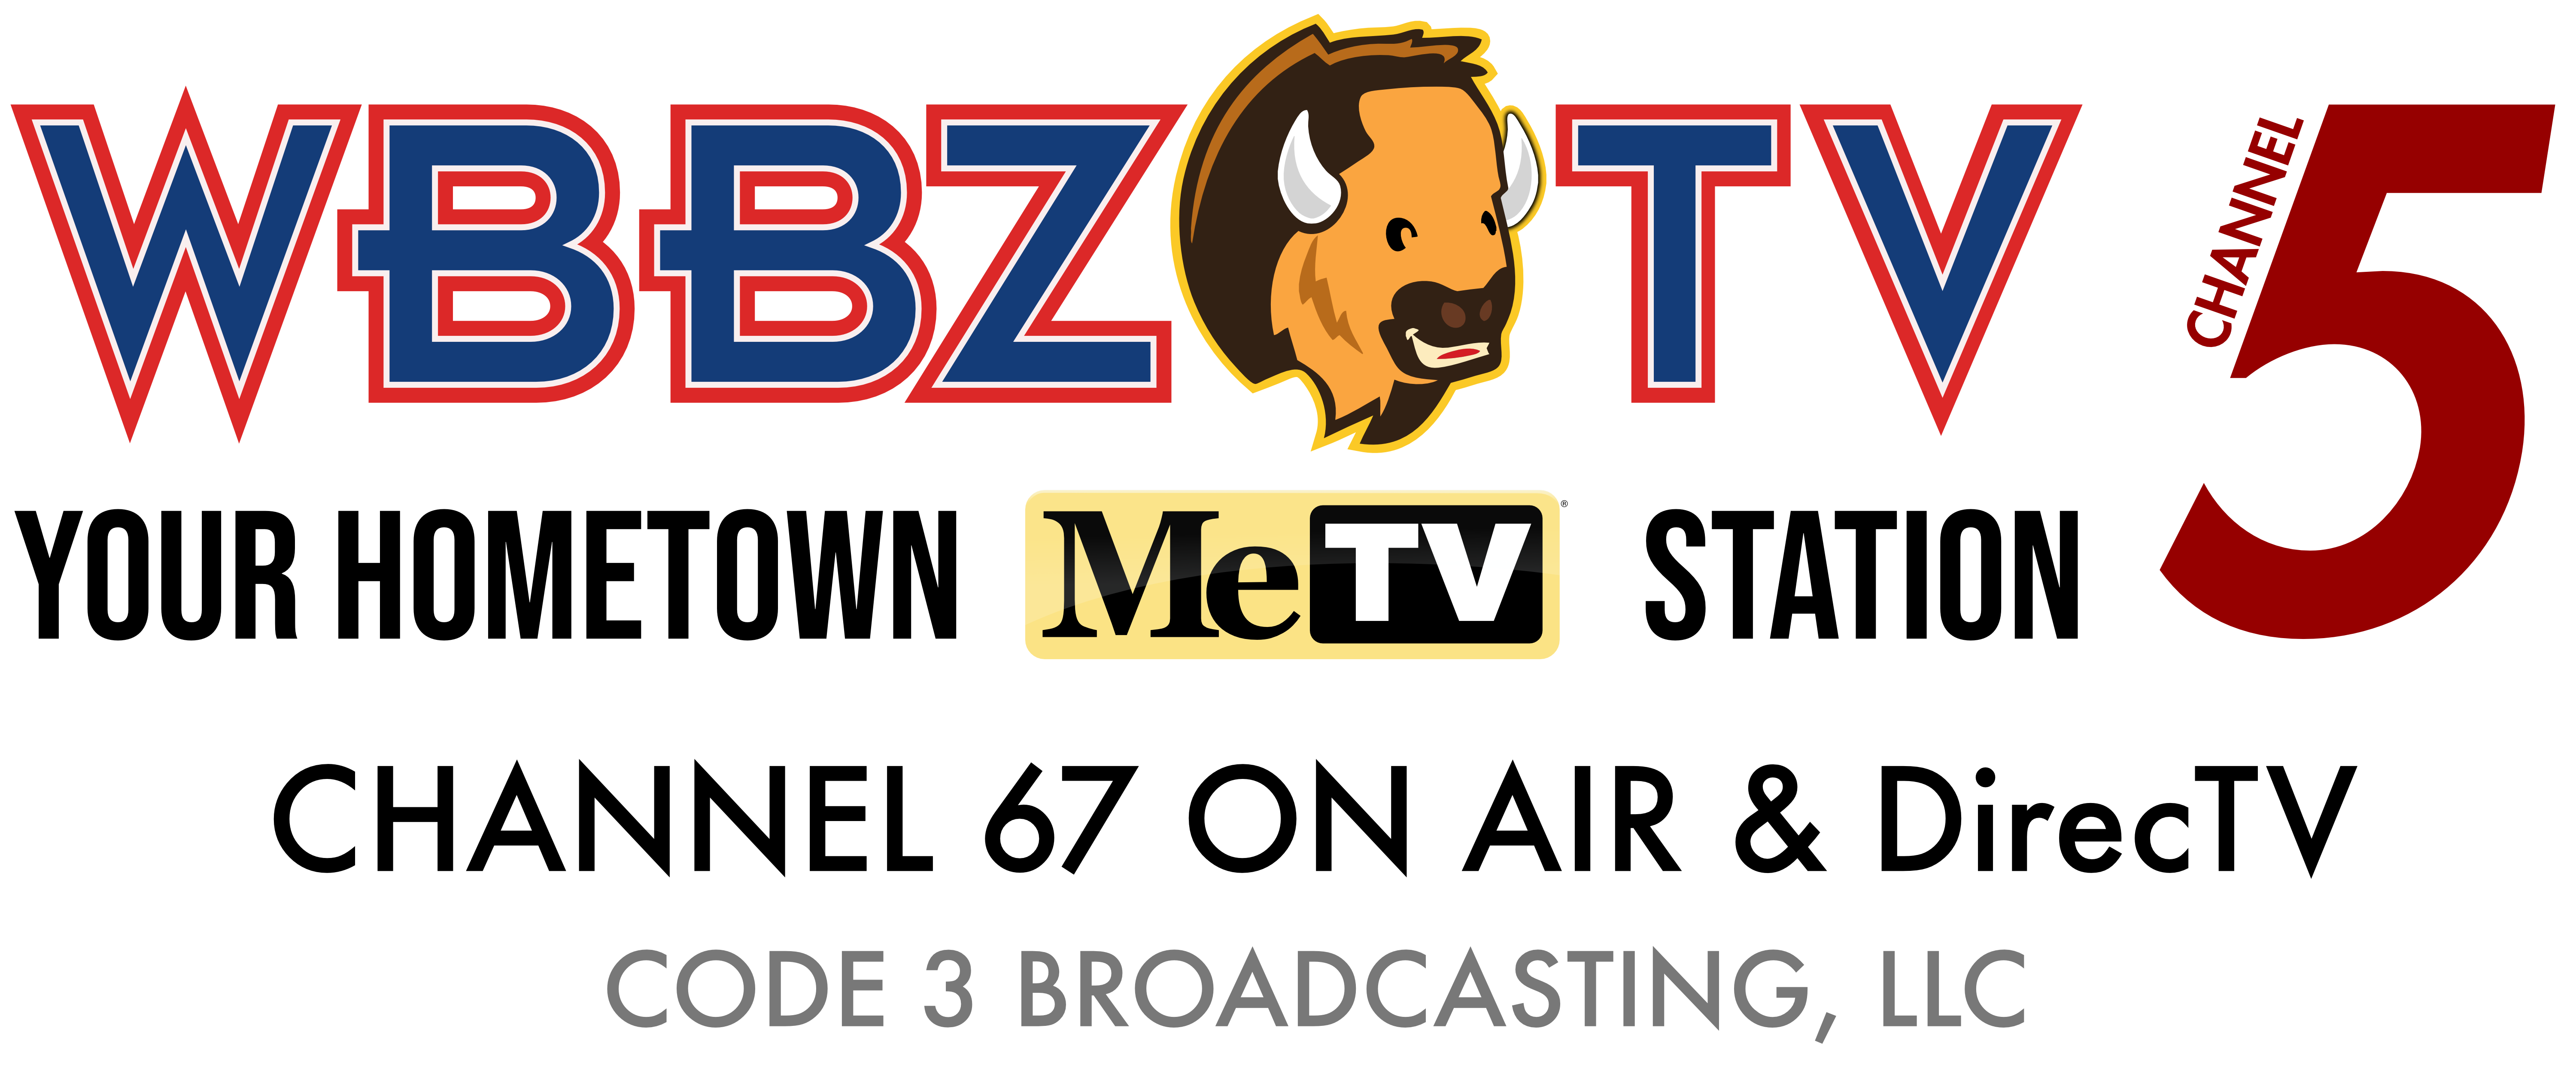 WBBZ-TV Logo Black